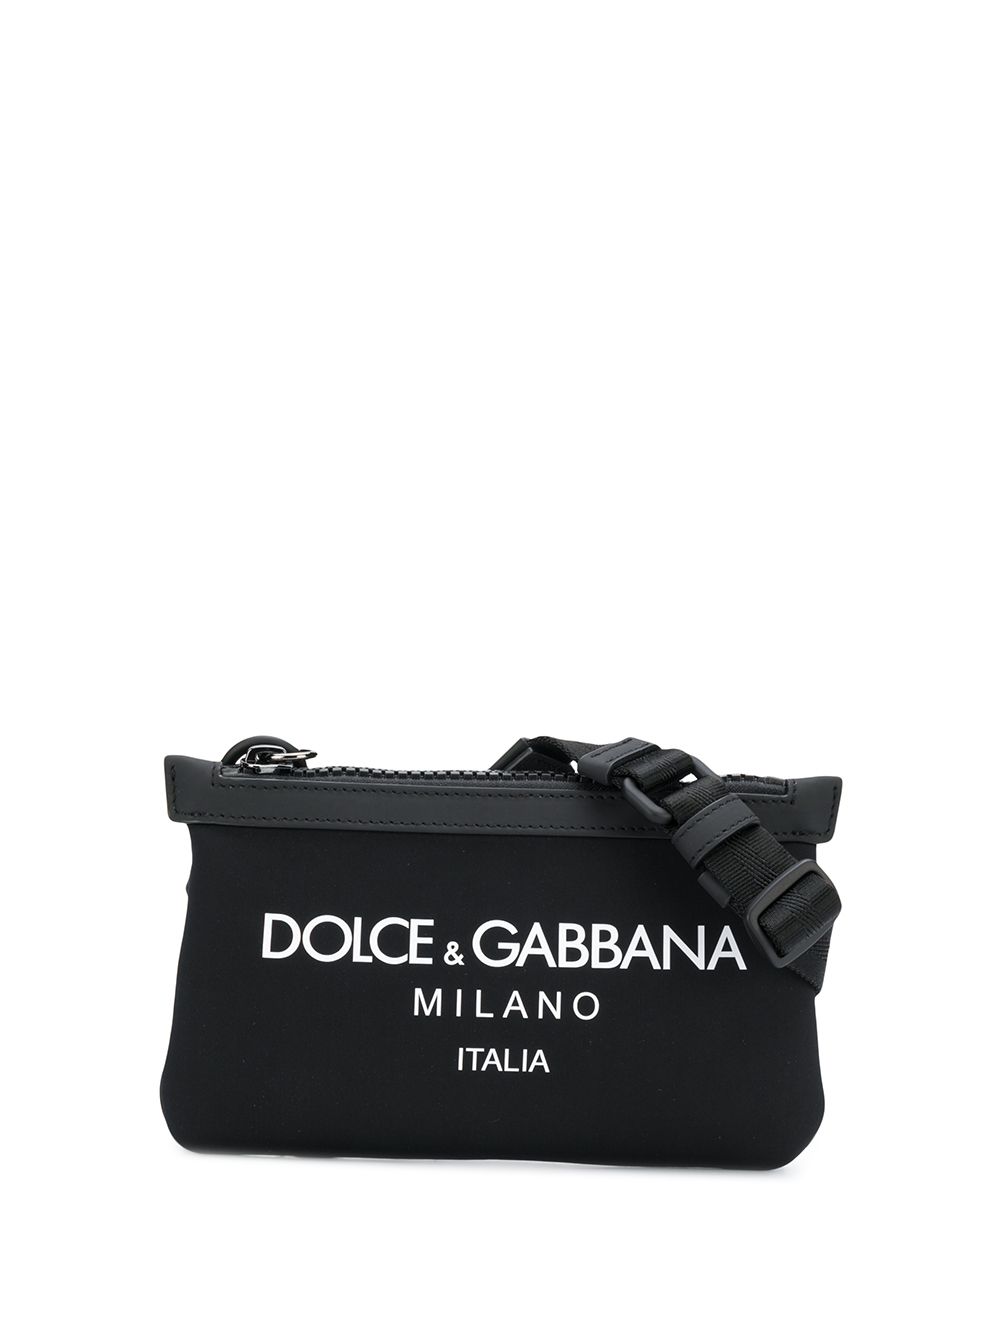 фото Dolce & gabbana поясная сумка palermo tecnico